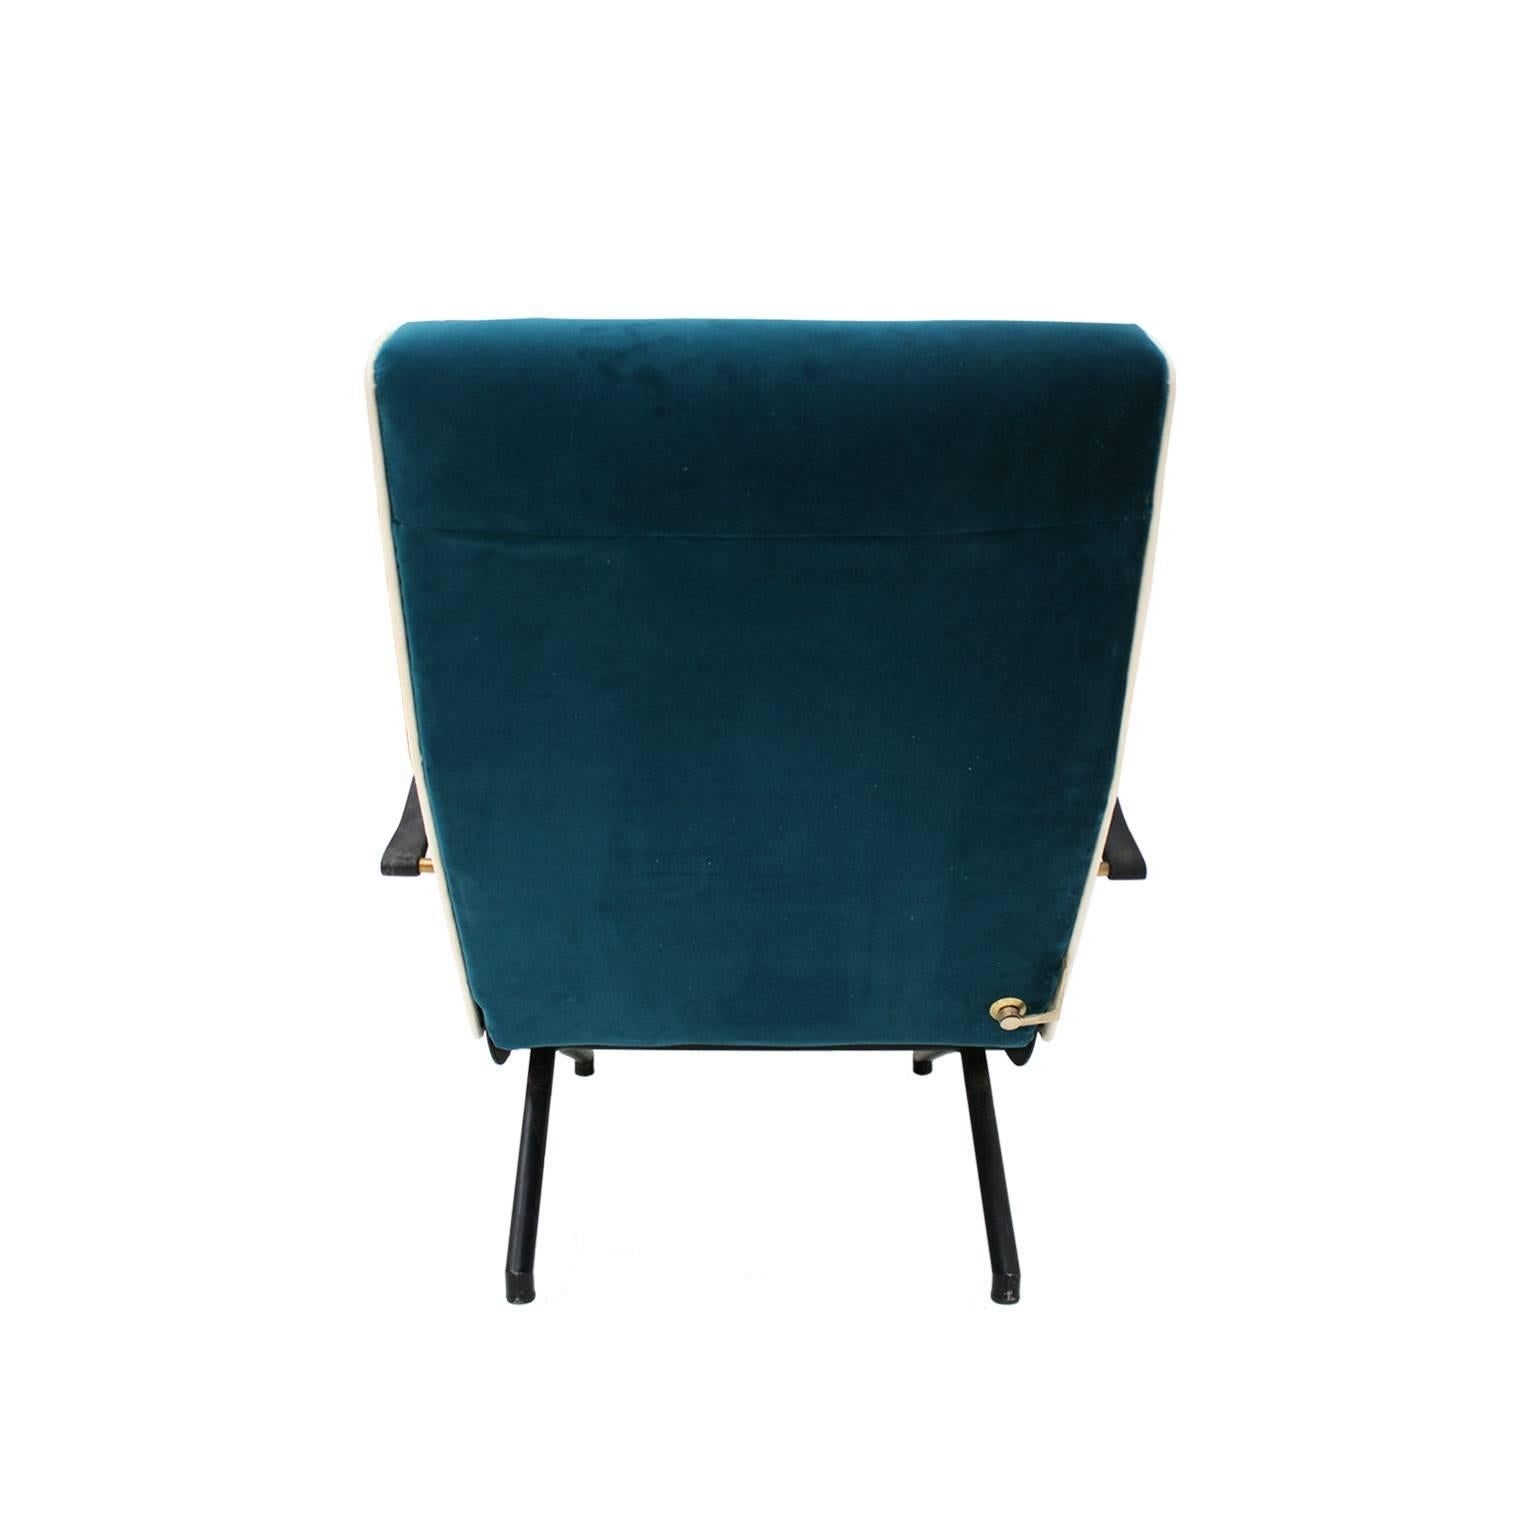 Mid-20th Century Lounge Chair Model P40 Designed by Osvaldo Borsani for Tecno